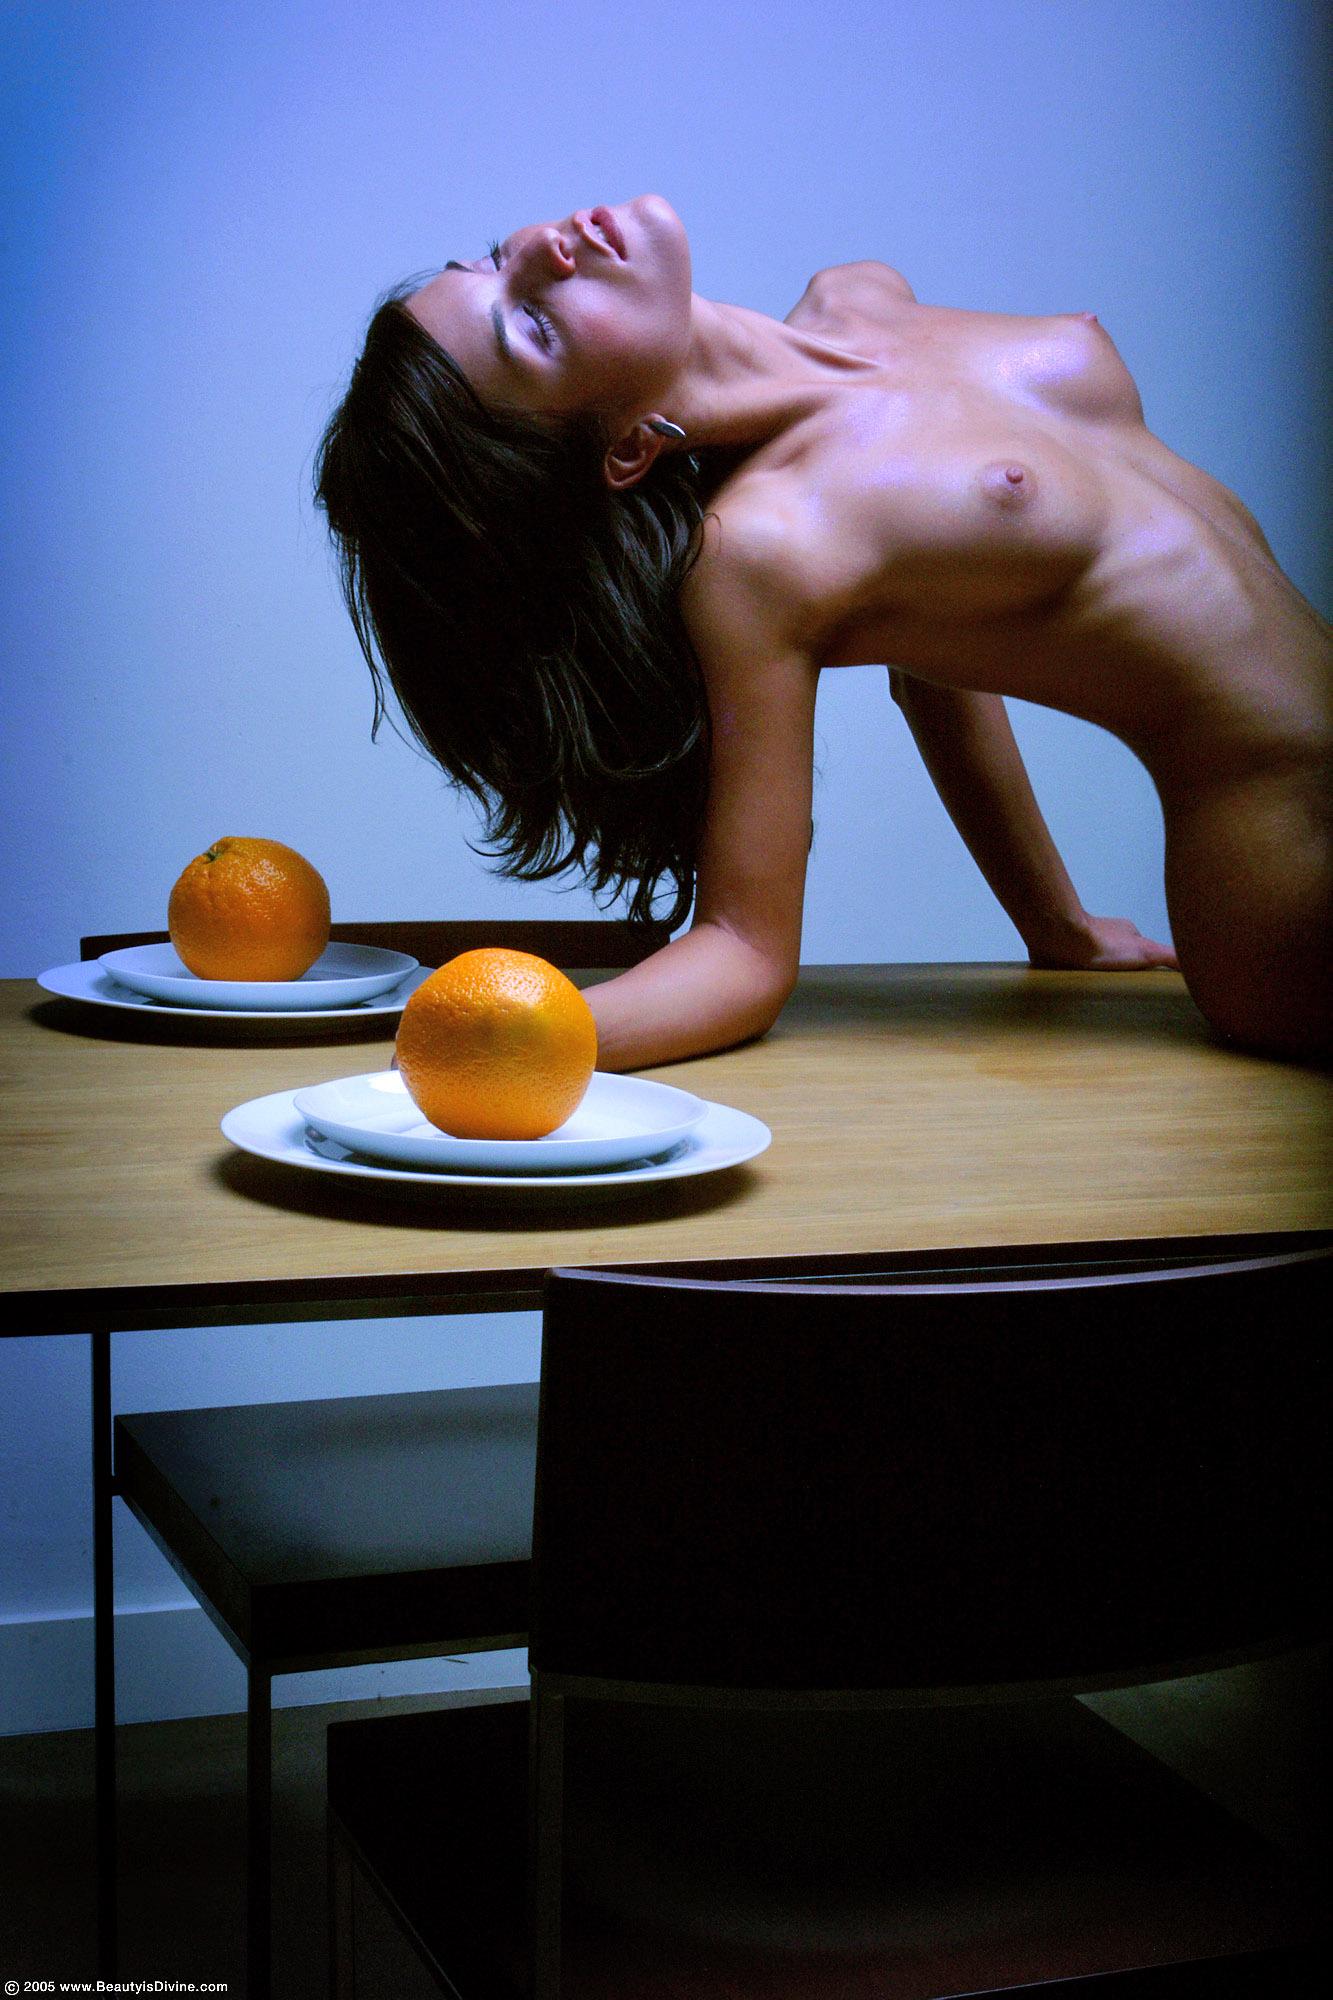 nella-orange-crush-naked-brunette-nude-art-beautyisdivine-20